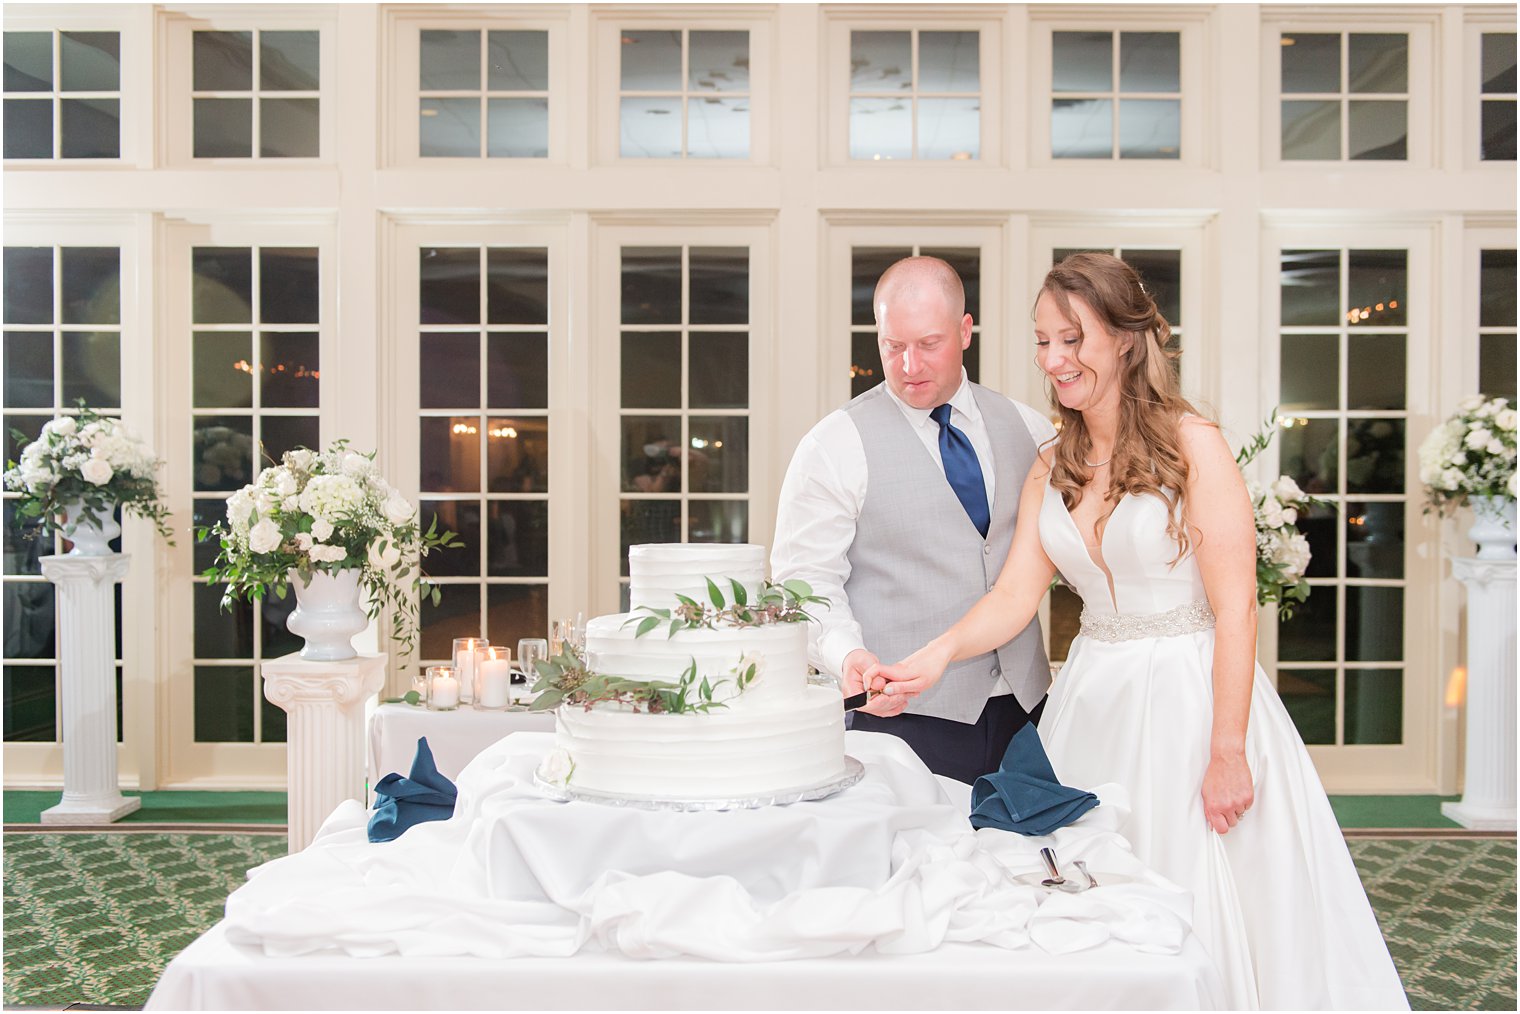 bride and groom cut wedding cake during NJ wedding reception 